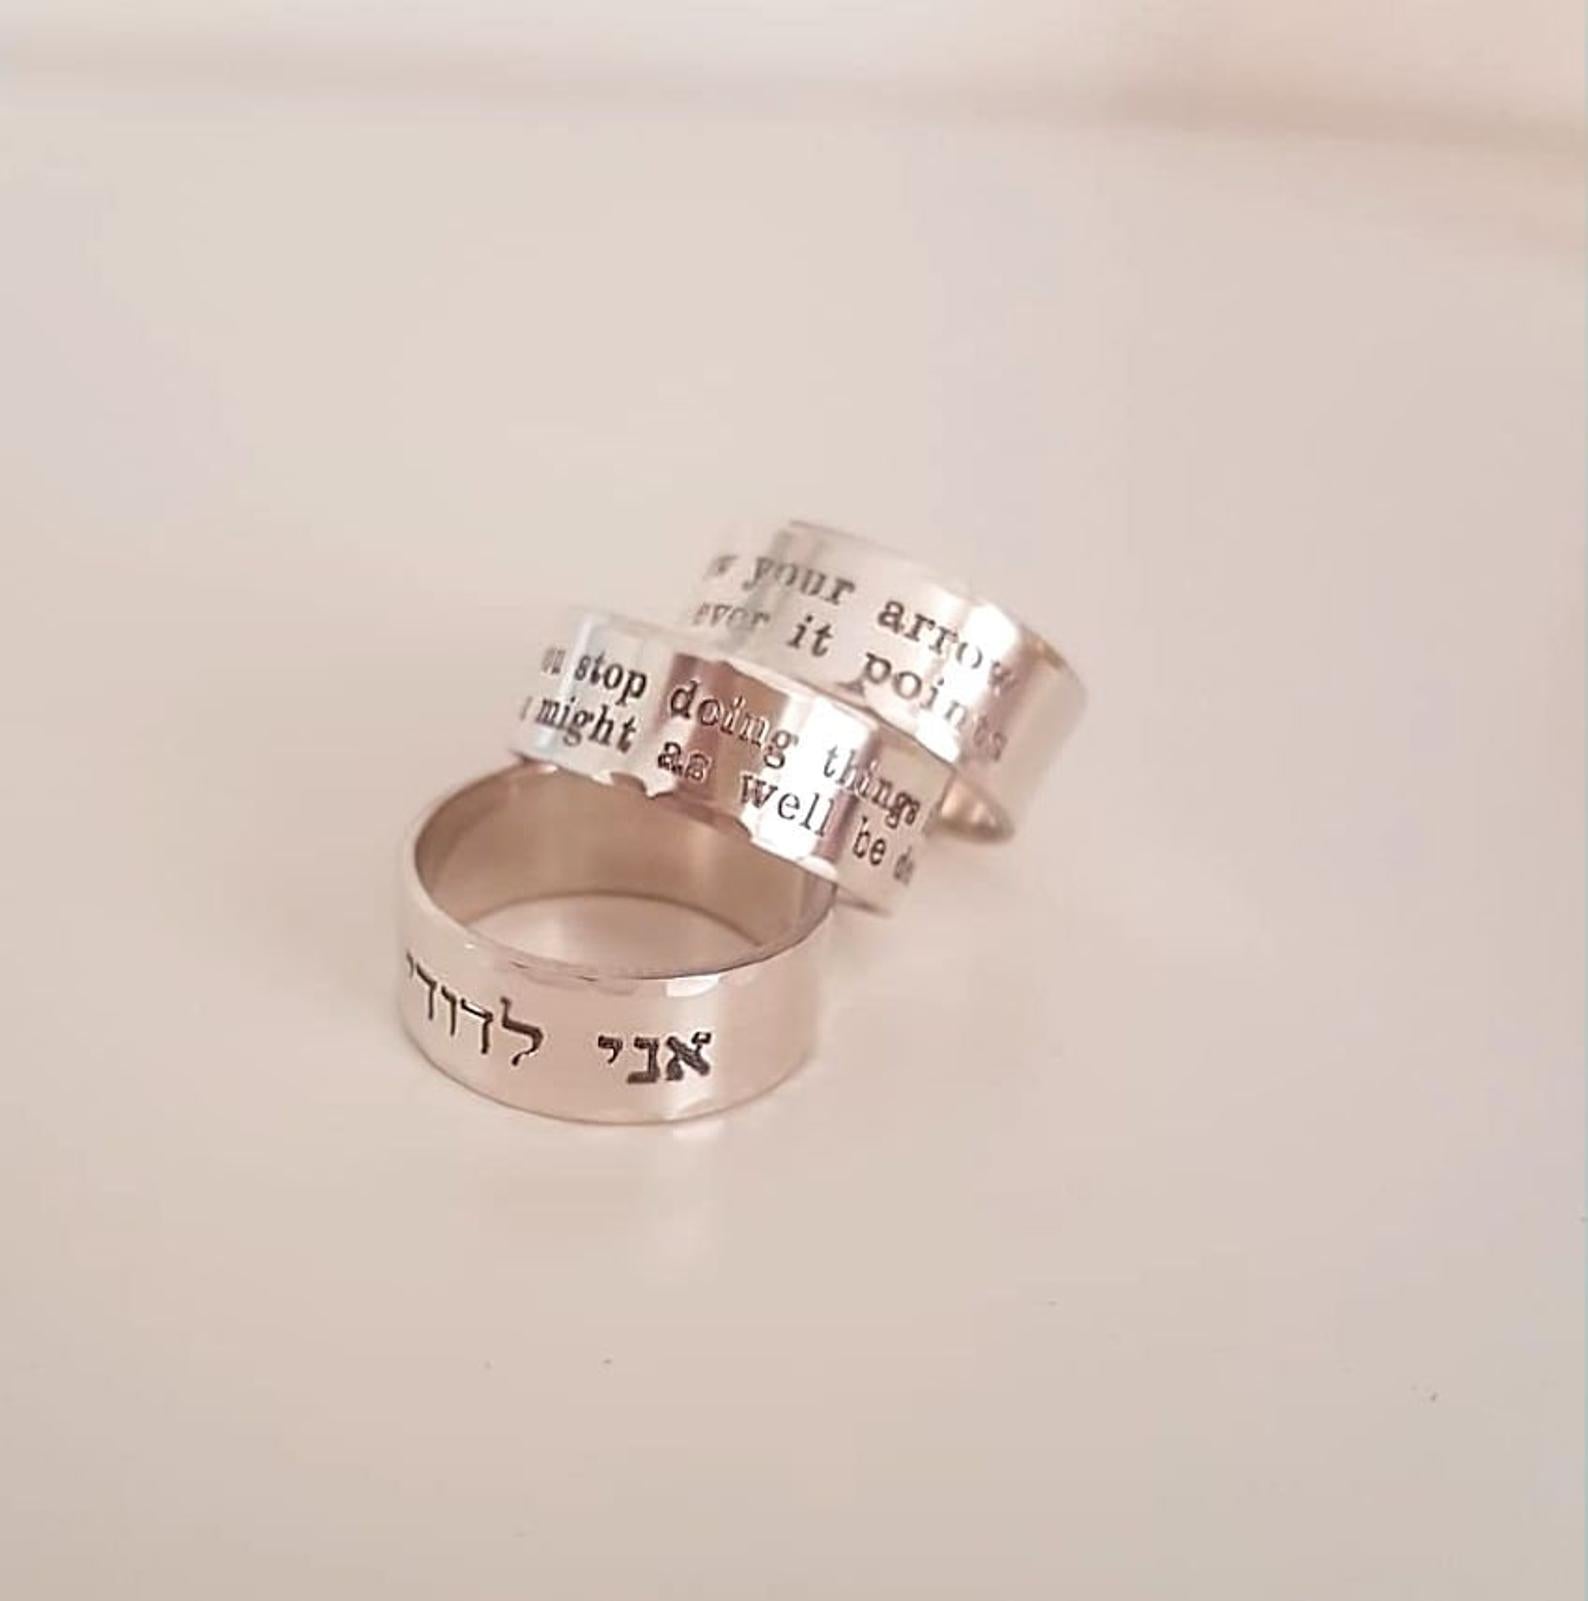 Star of David Men's Ring in Real 925 Sterling Silver, Men's Signet Ring,  Magen David Jewish Ring, Hebrew Statement Ring, Made in Israel|Amazon.com